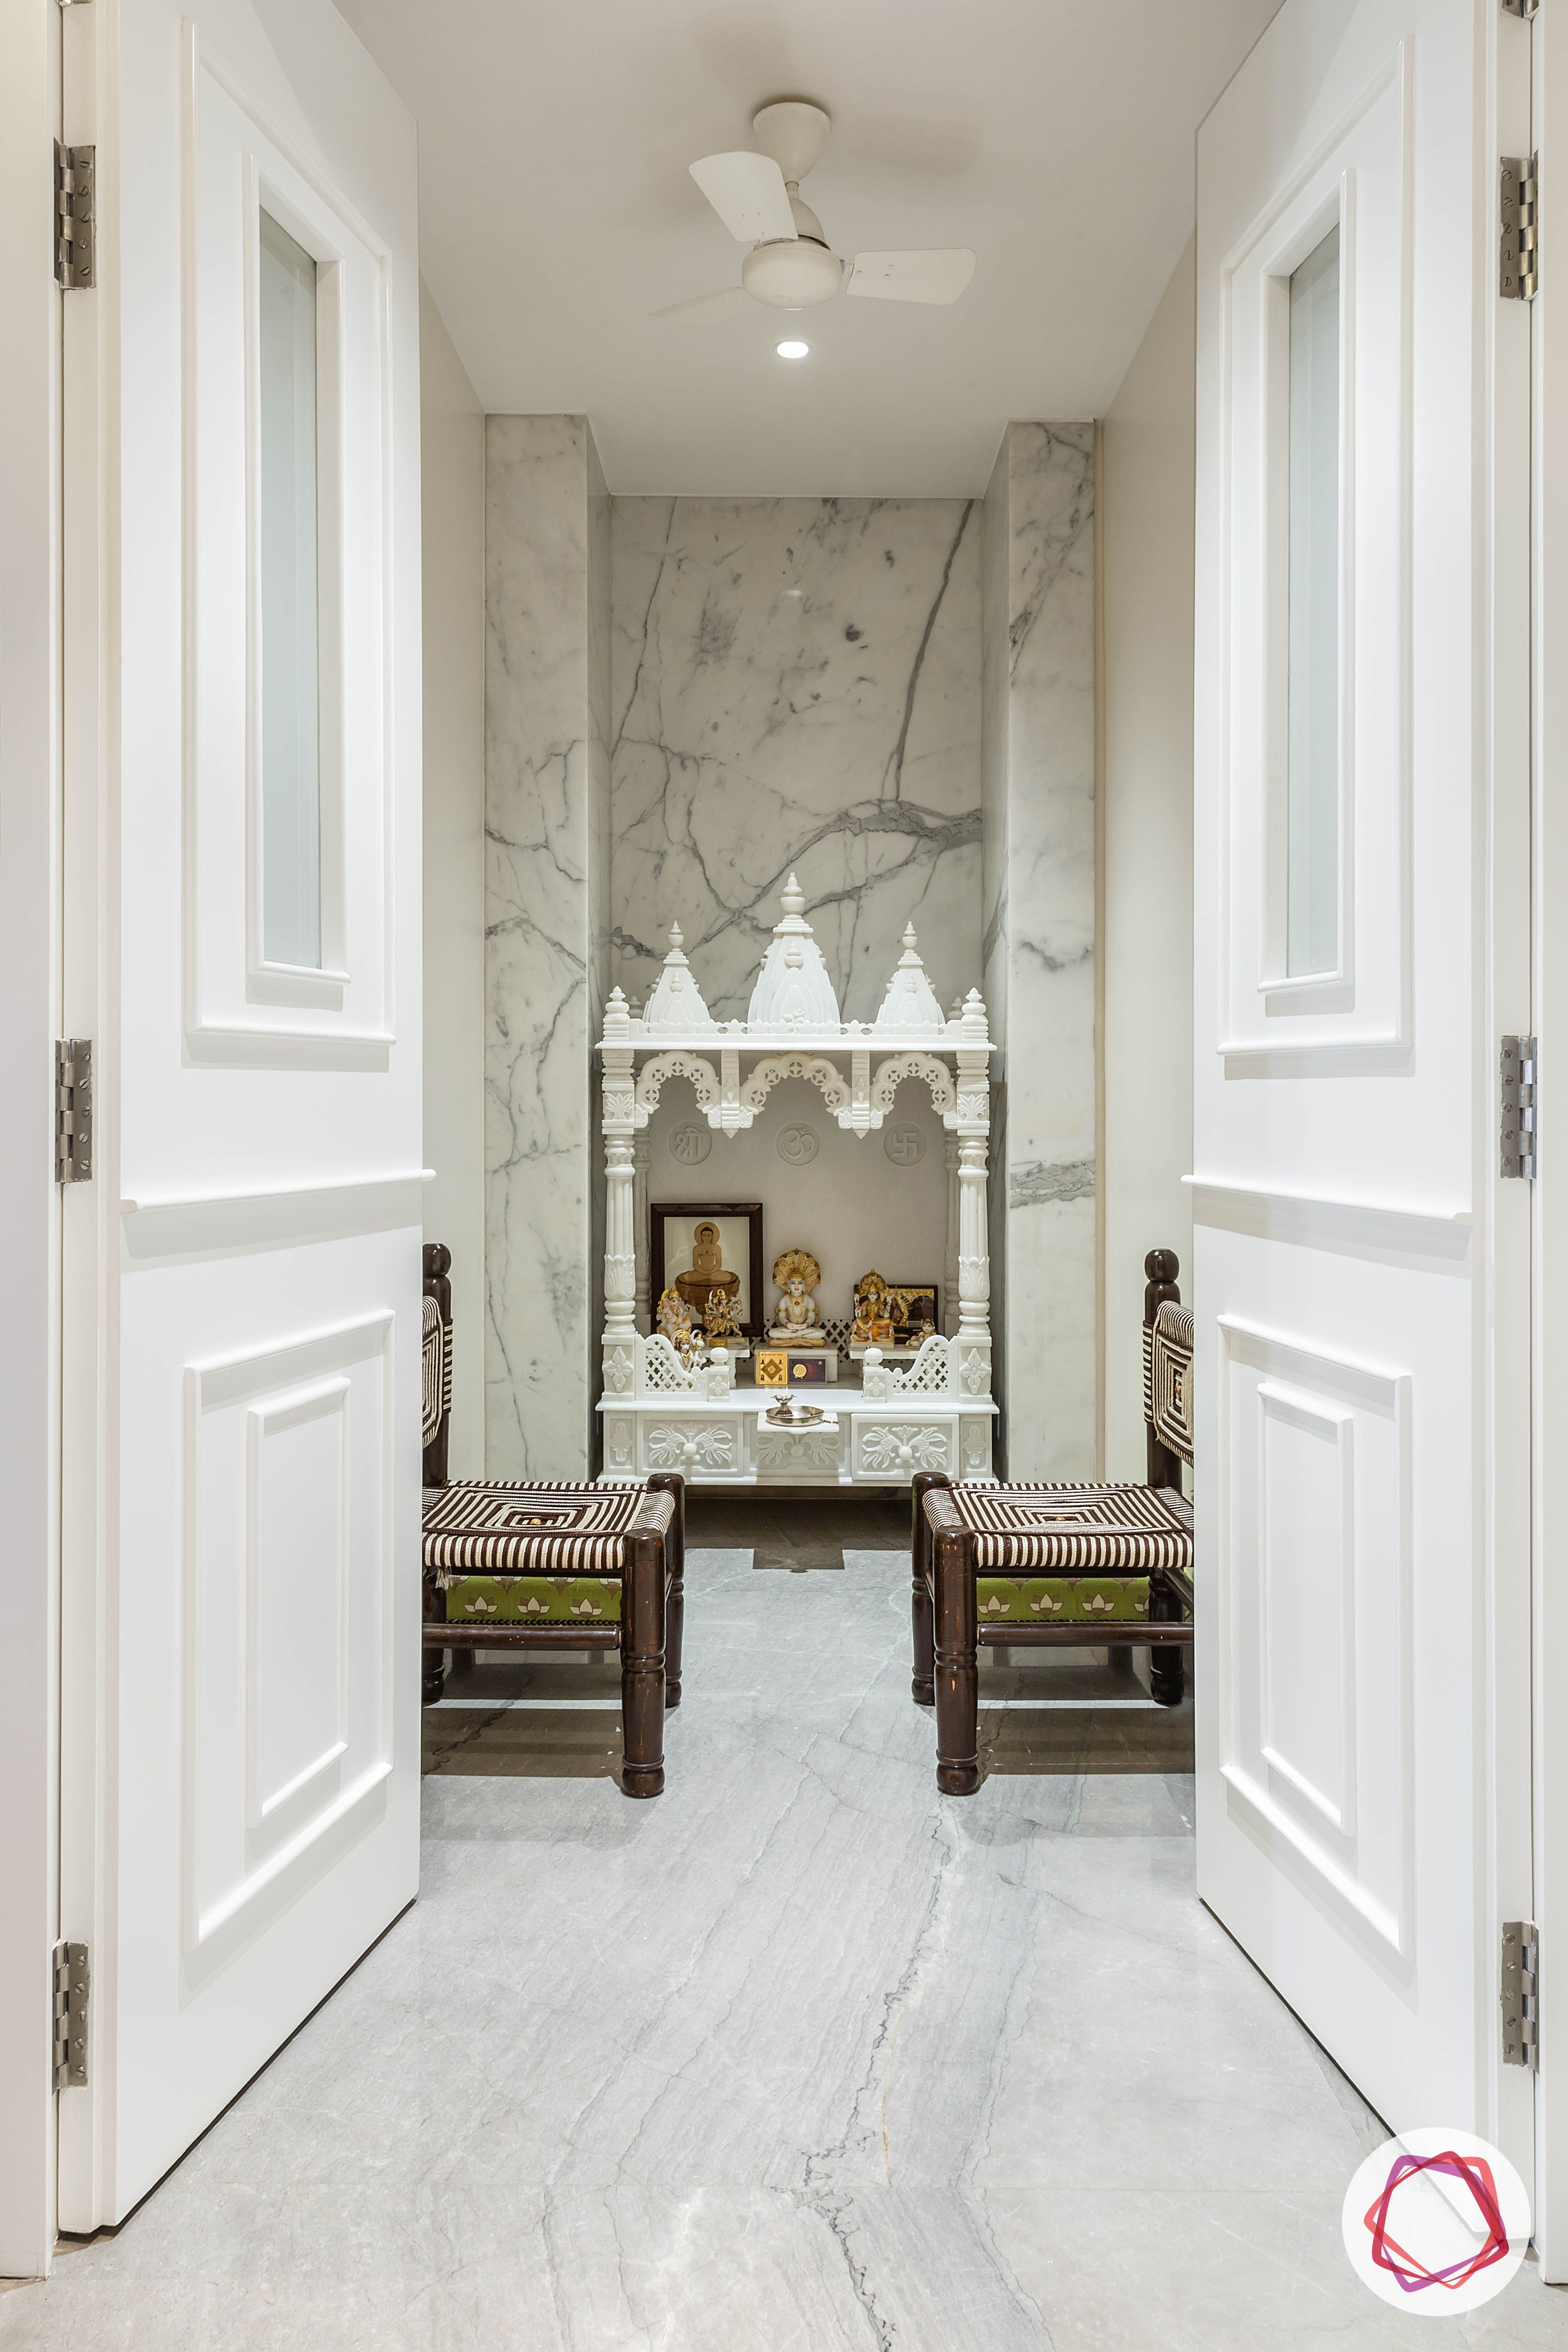 4bhk house plan-pooja room designs-marble flooring-marble pooja room designs-mandir designs-marble mandir